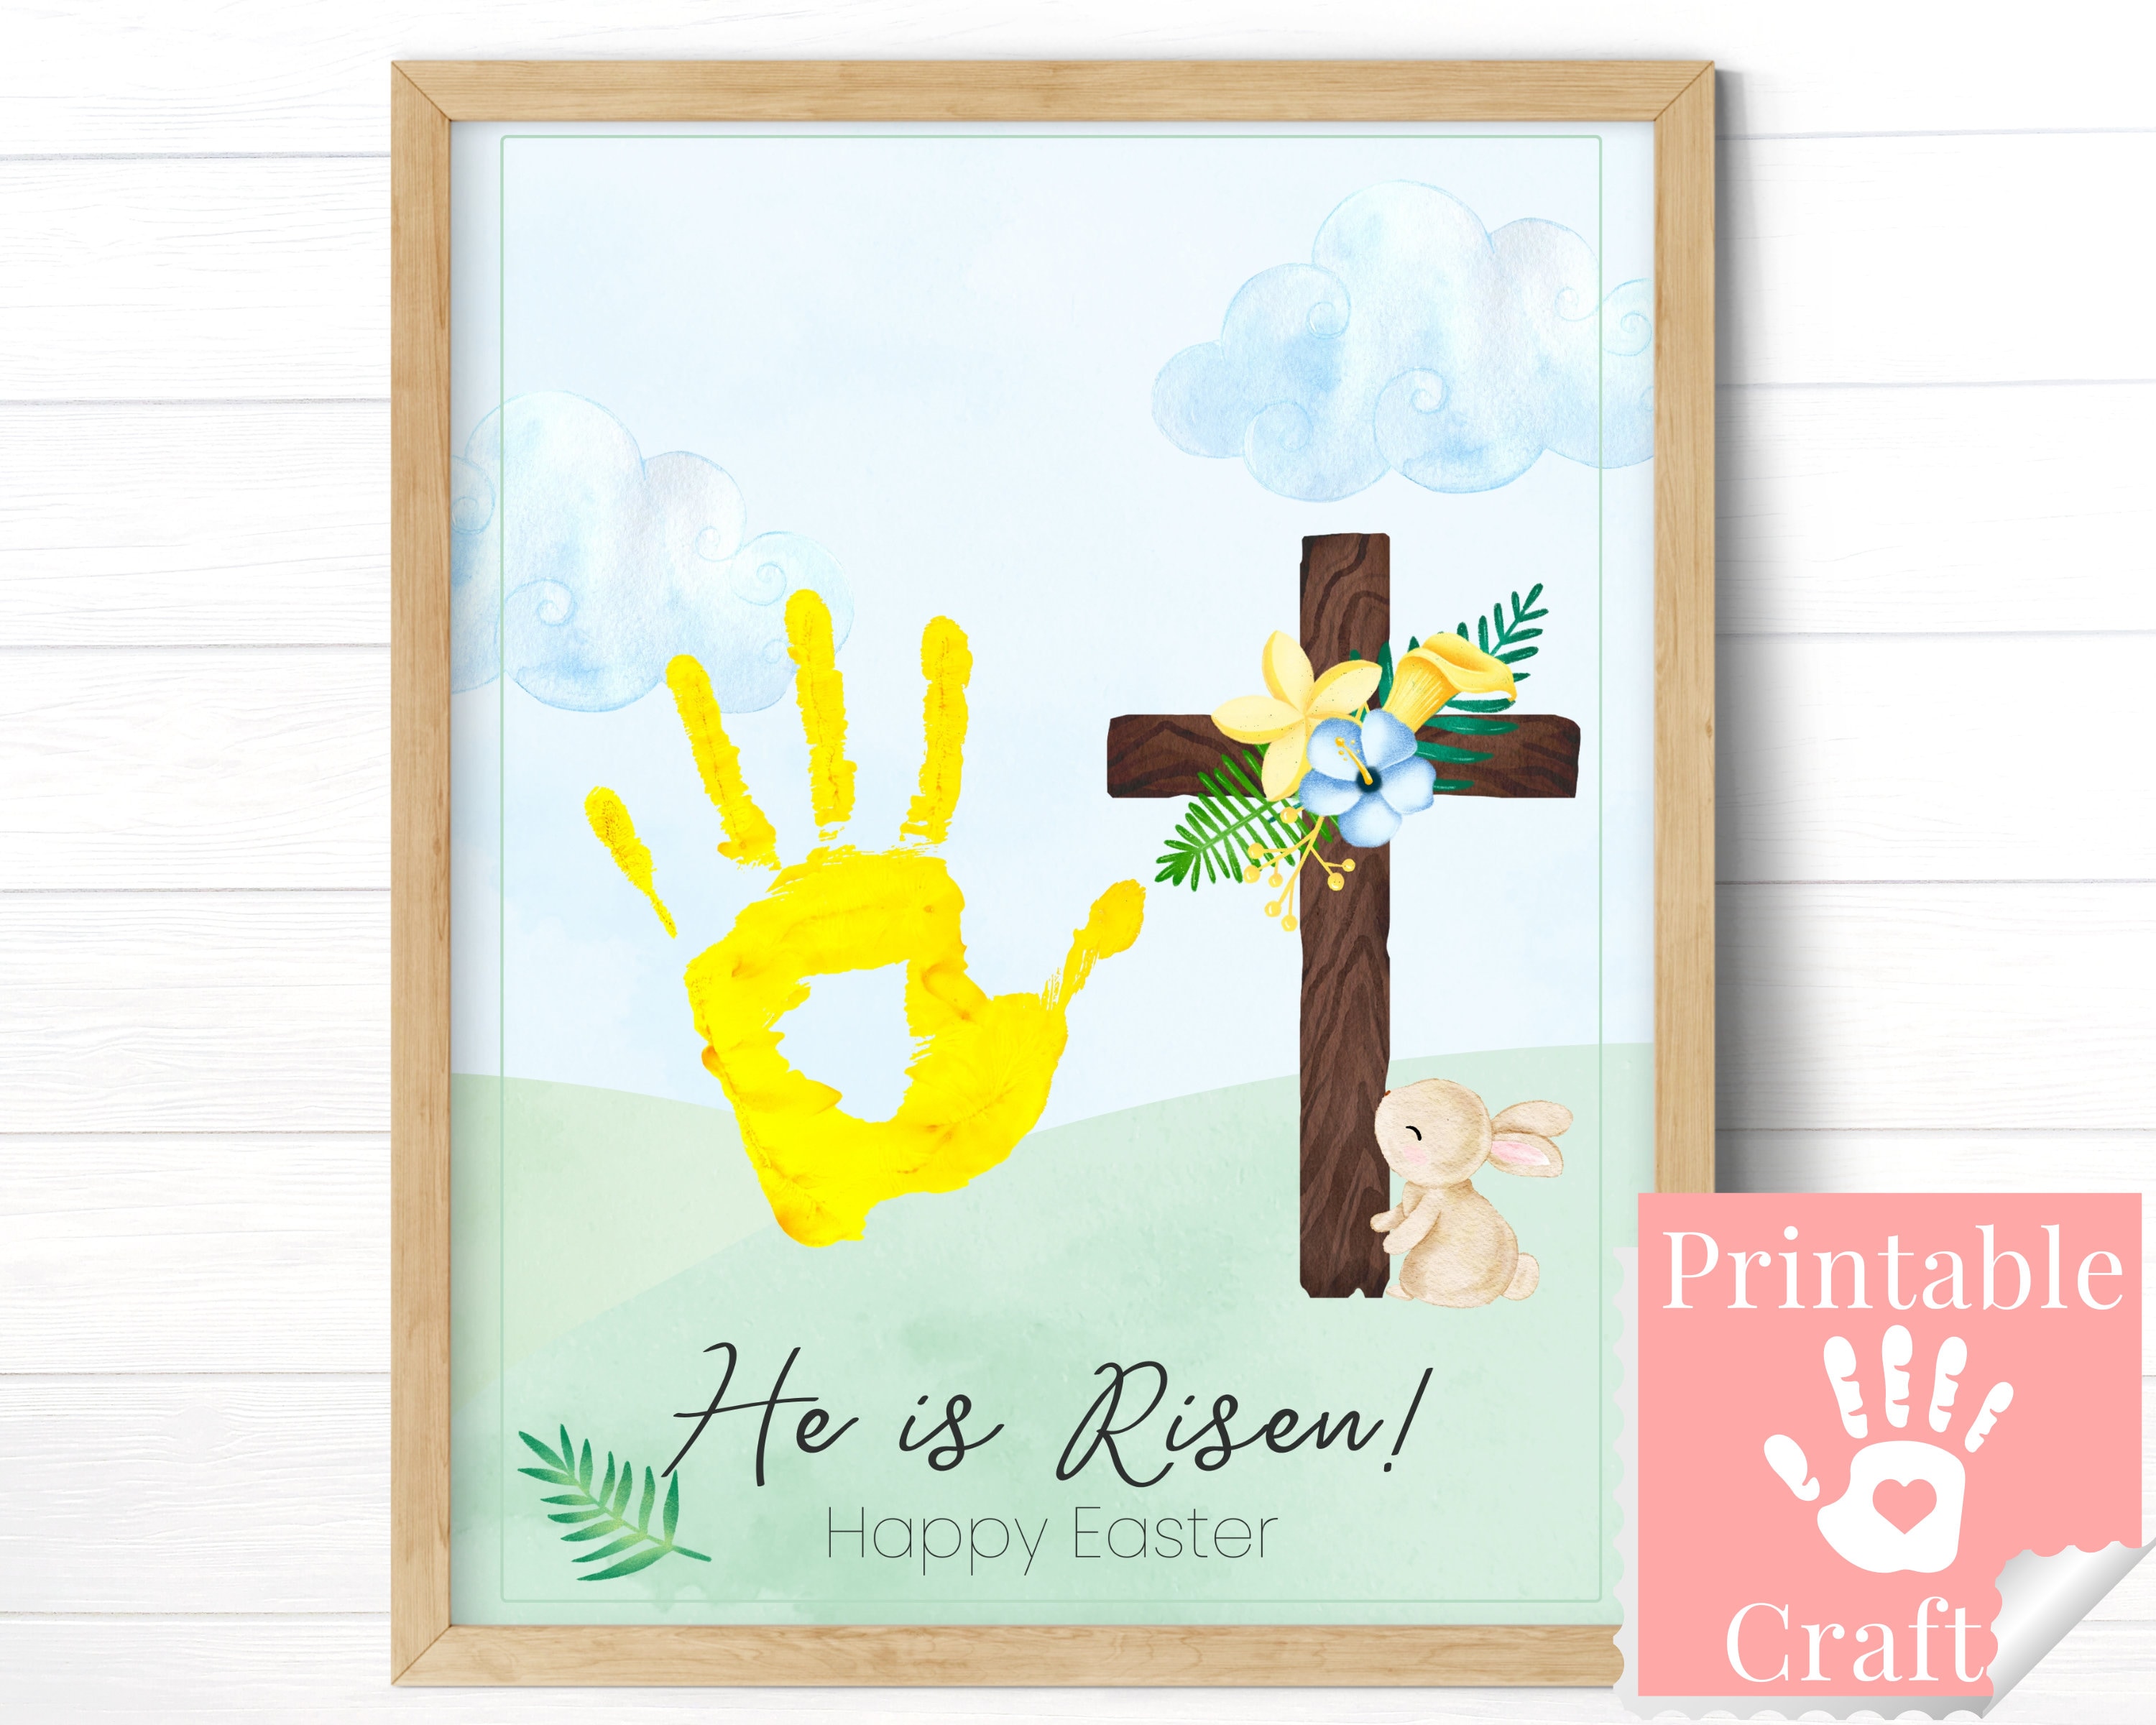 Easy Easter Sunday School Craft - The Crafty Classroom